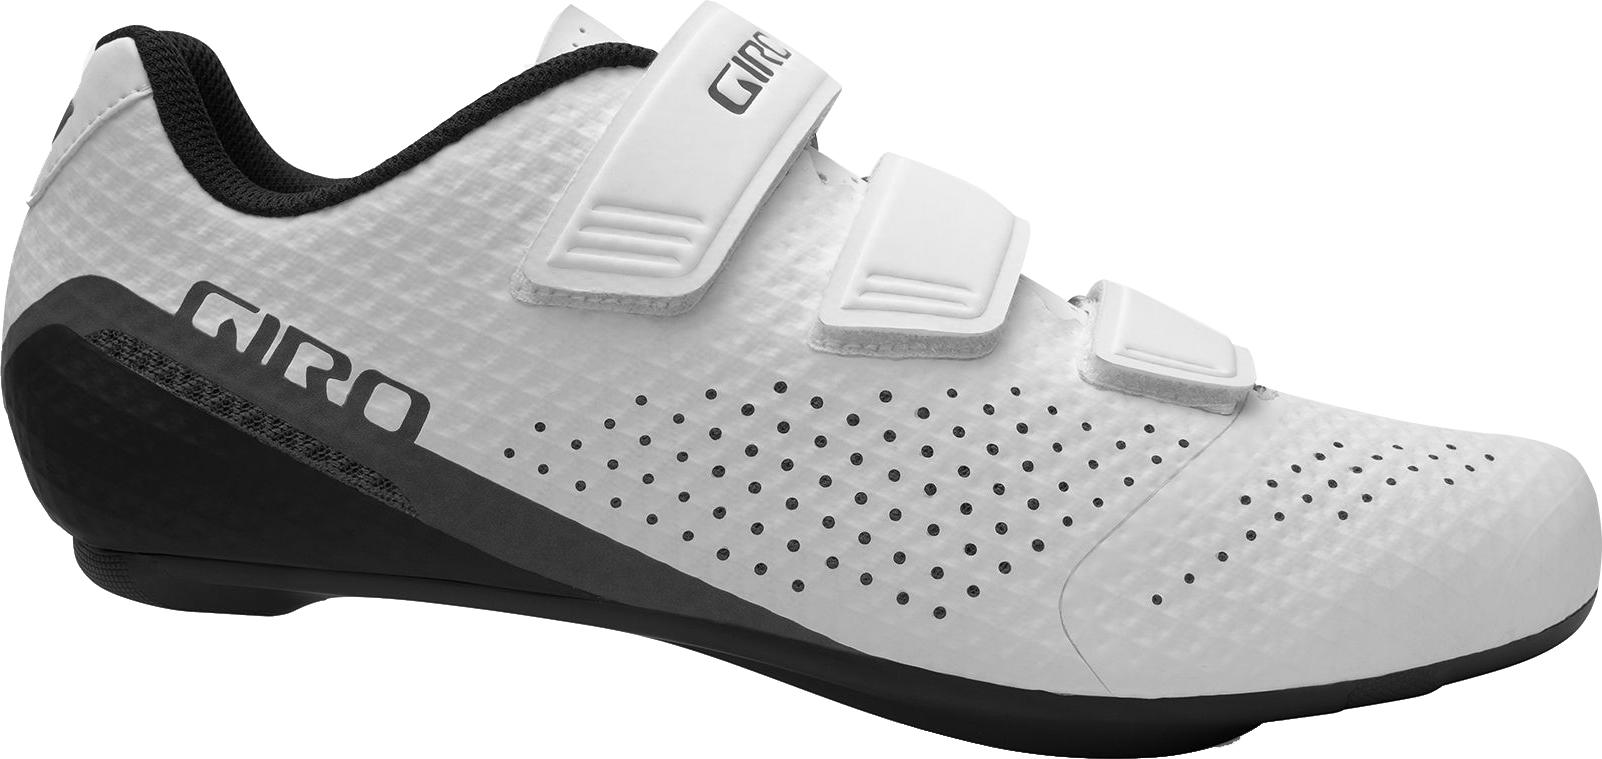 giro stylus road shoes